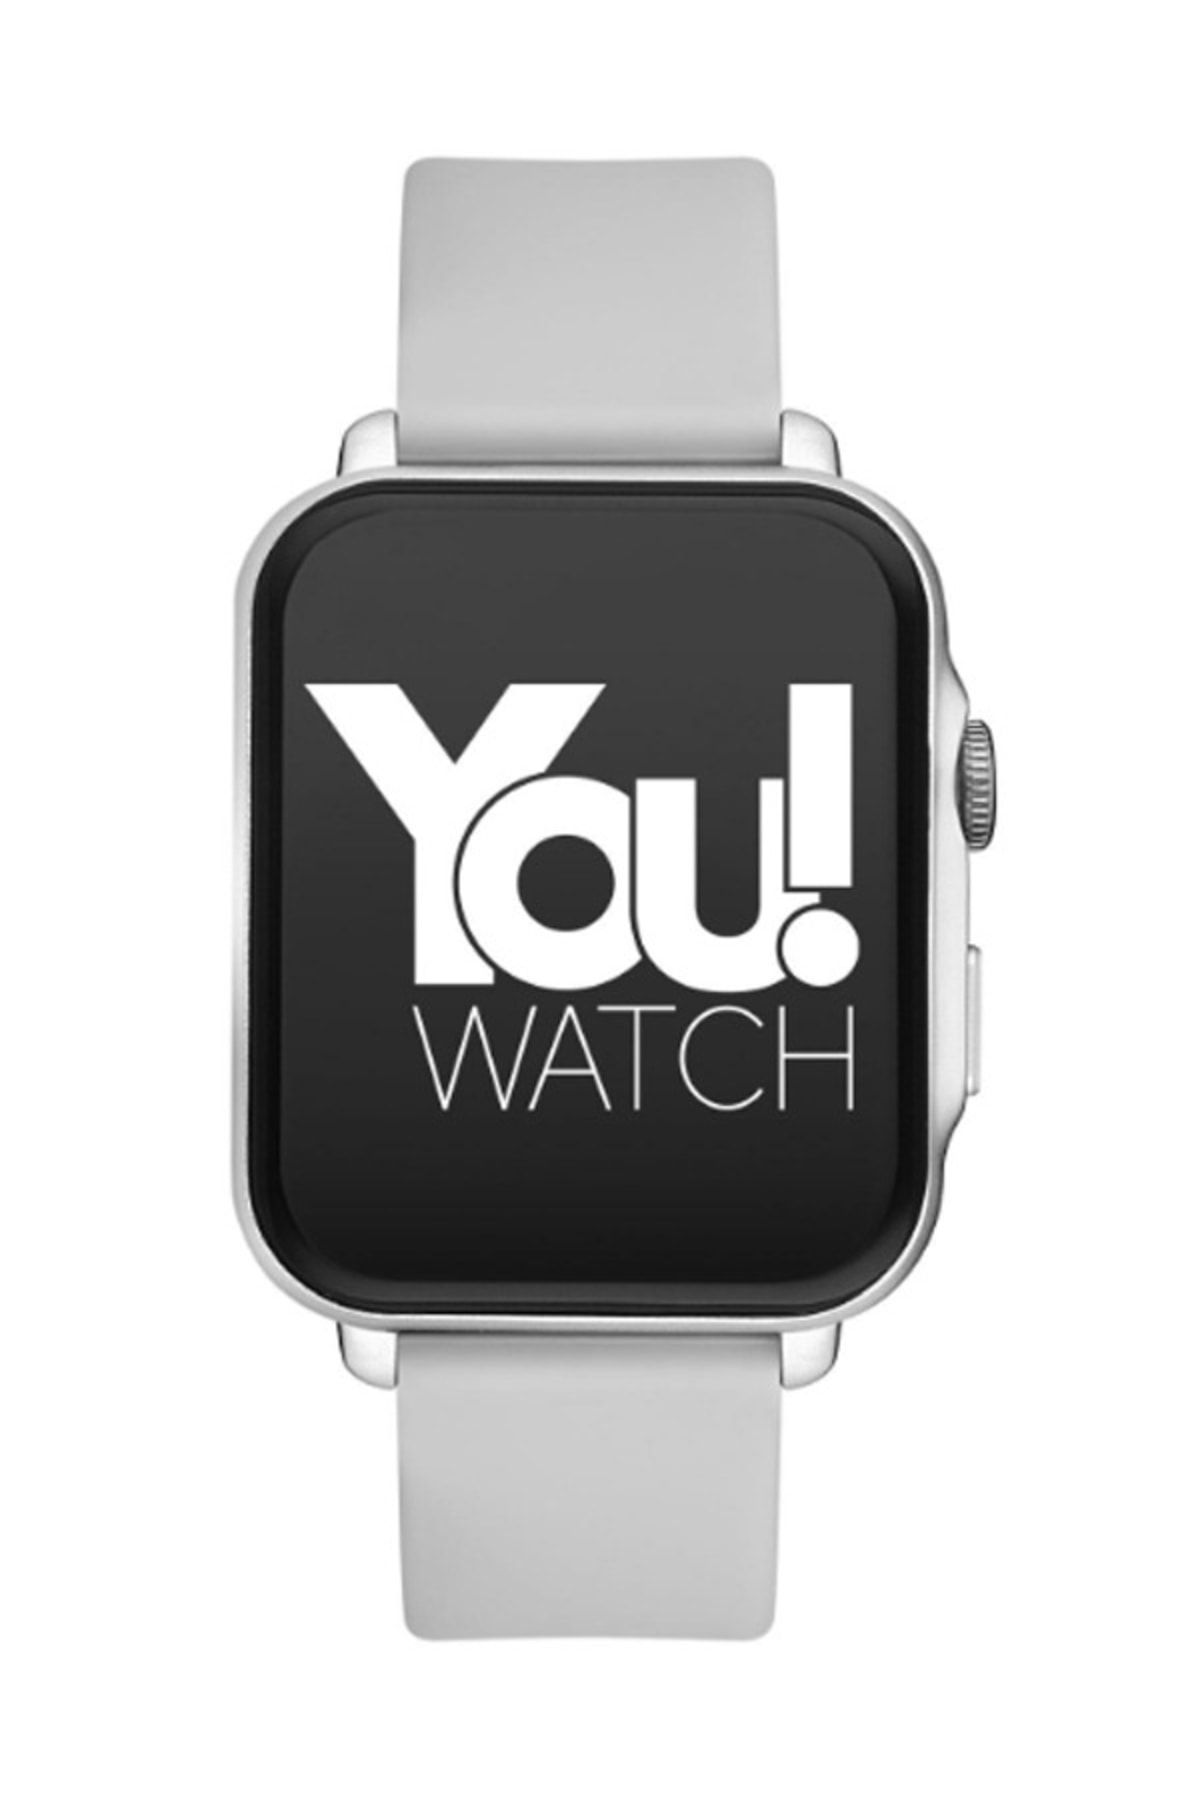 You Watch Youwatch F13-yf133 Gümüş Renk Kasa & Gri Silikon Kordon Akıllı Saat Ios Ve Android Uyumludur.